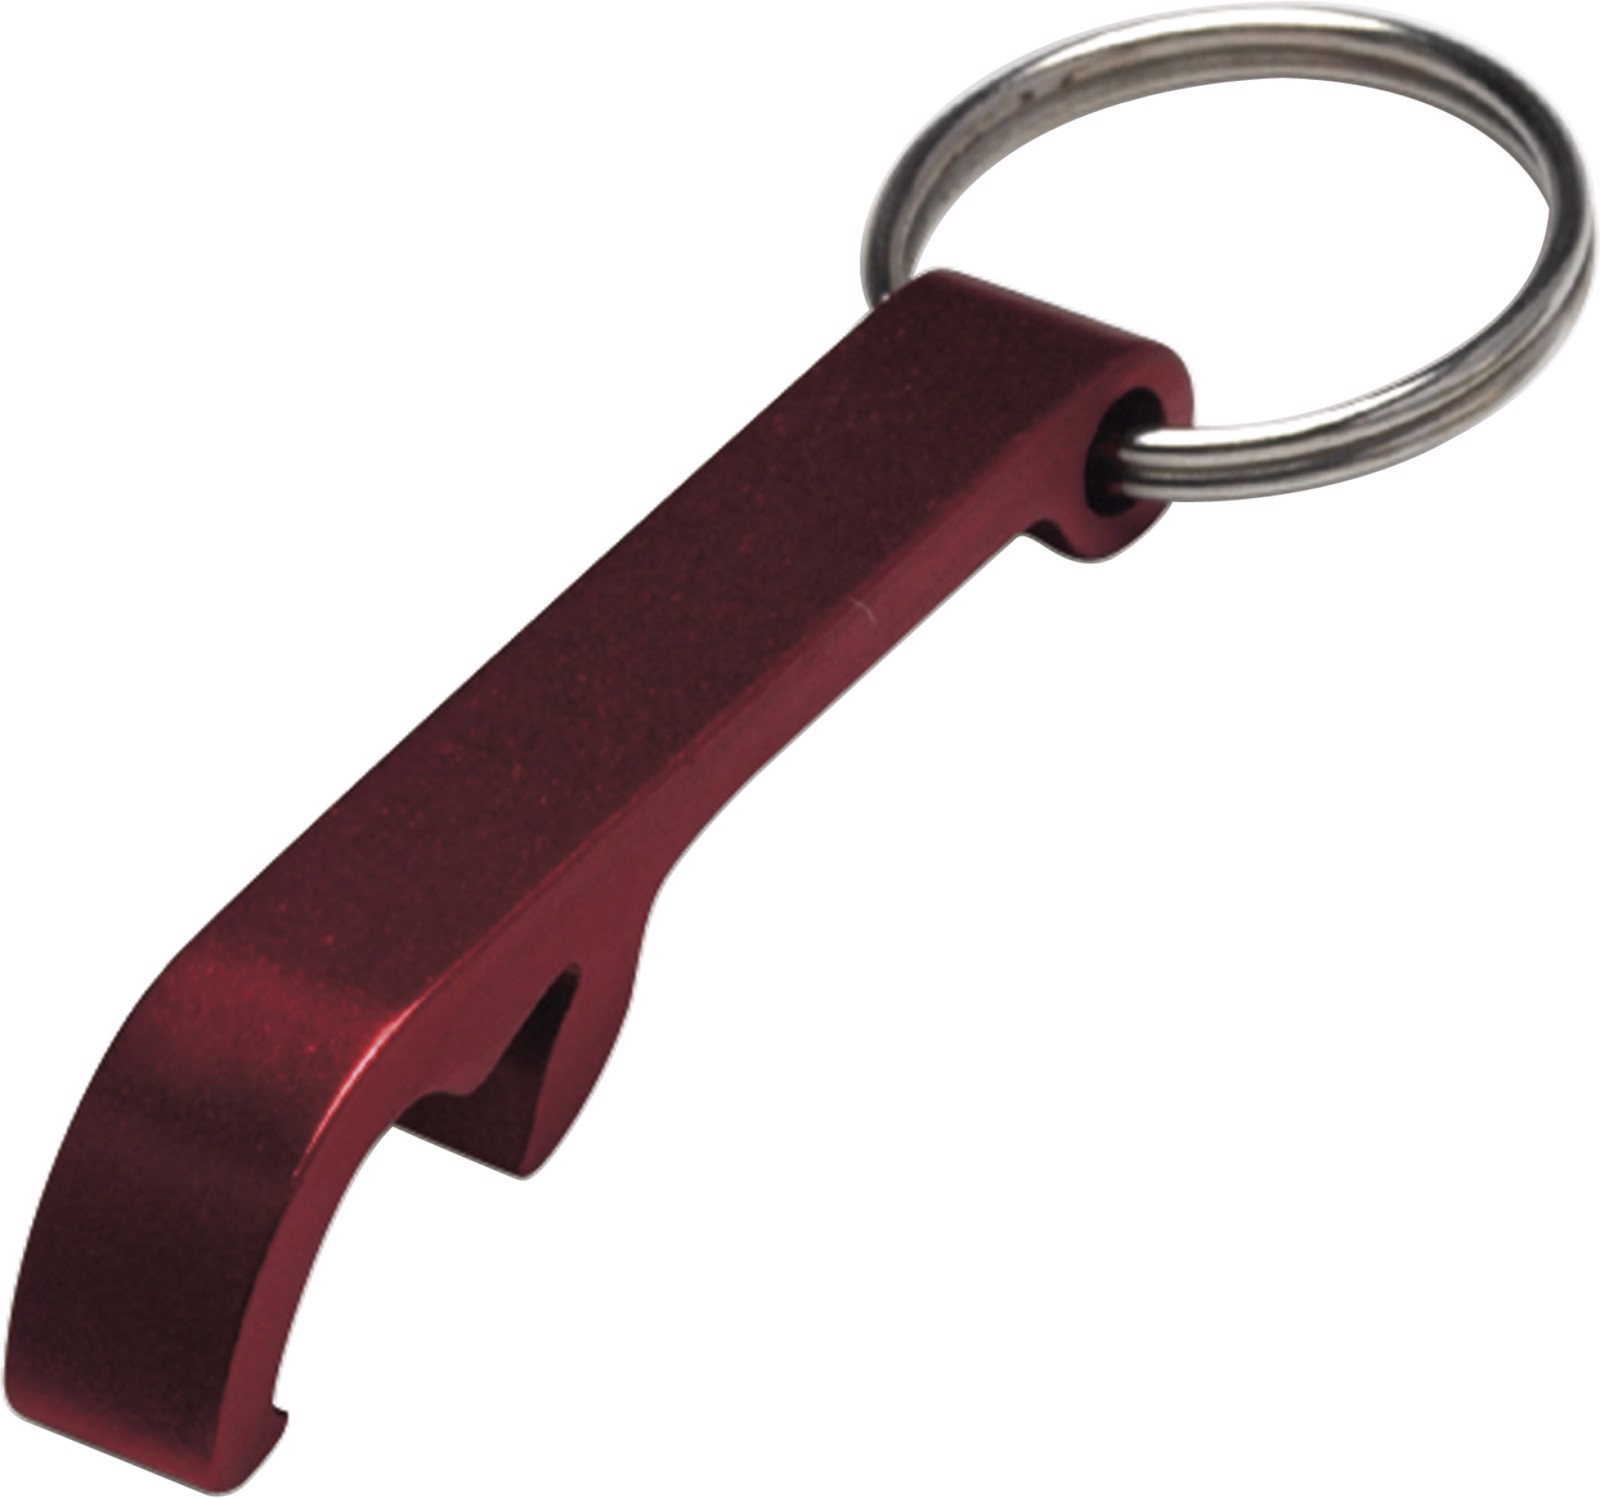 Metal 2-in-1 key holder - Red